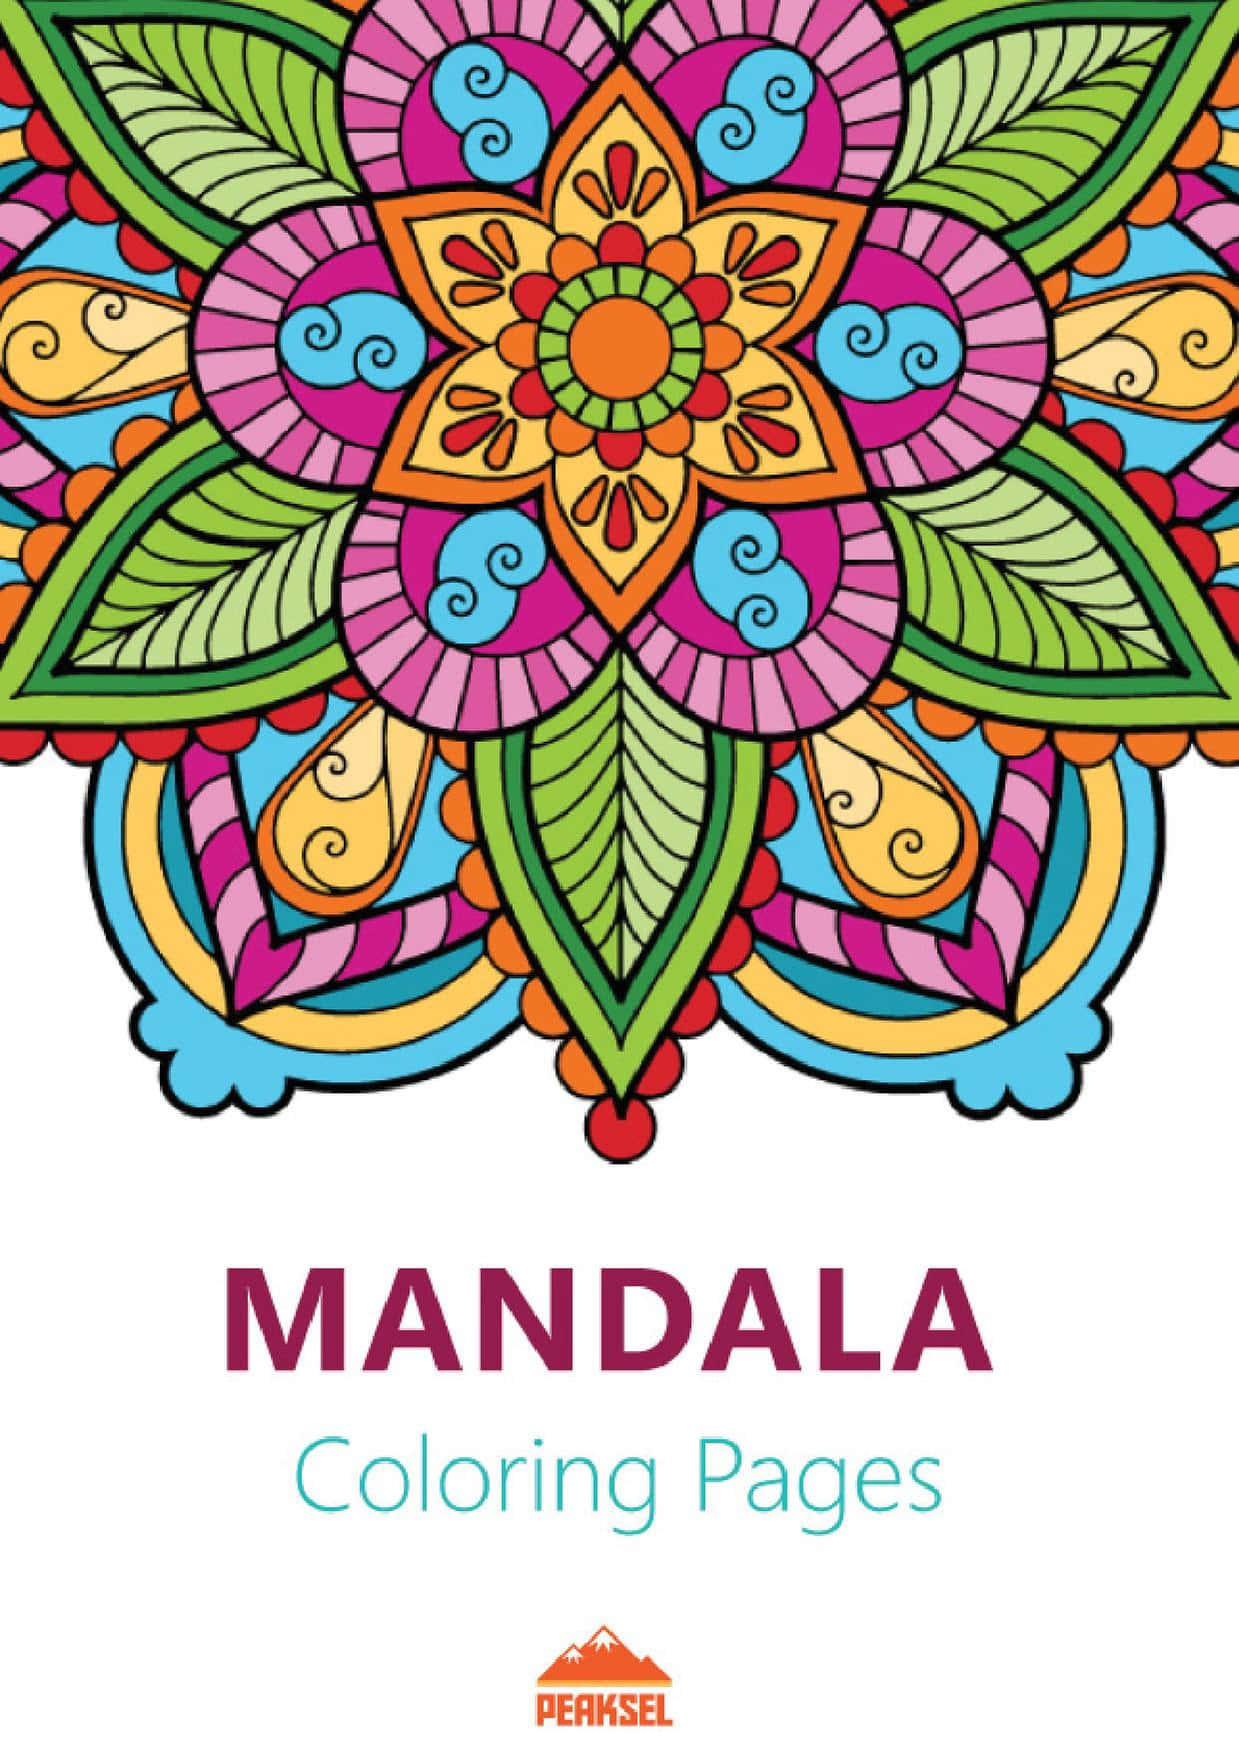 Mandala, symbolic representation of a universe